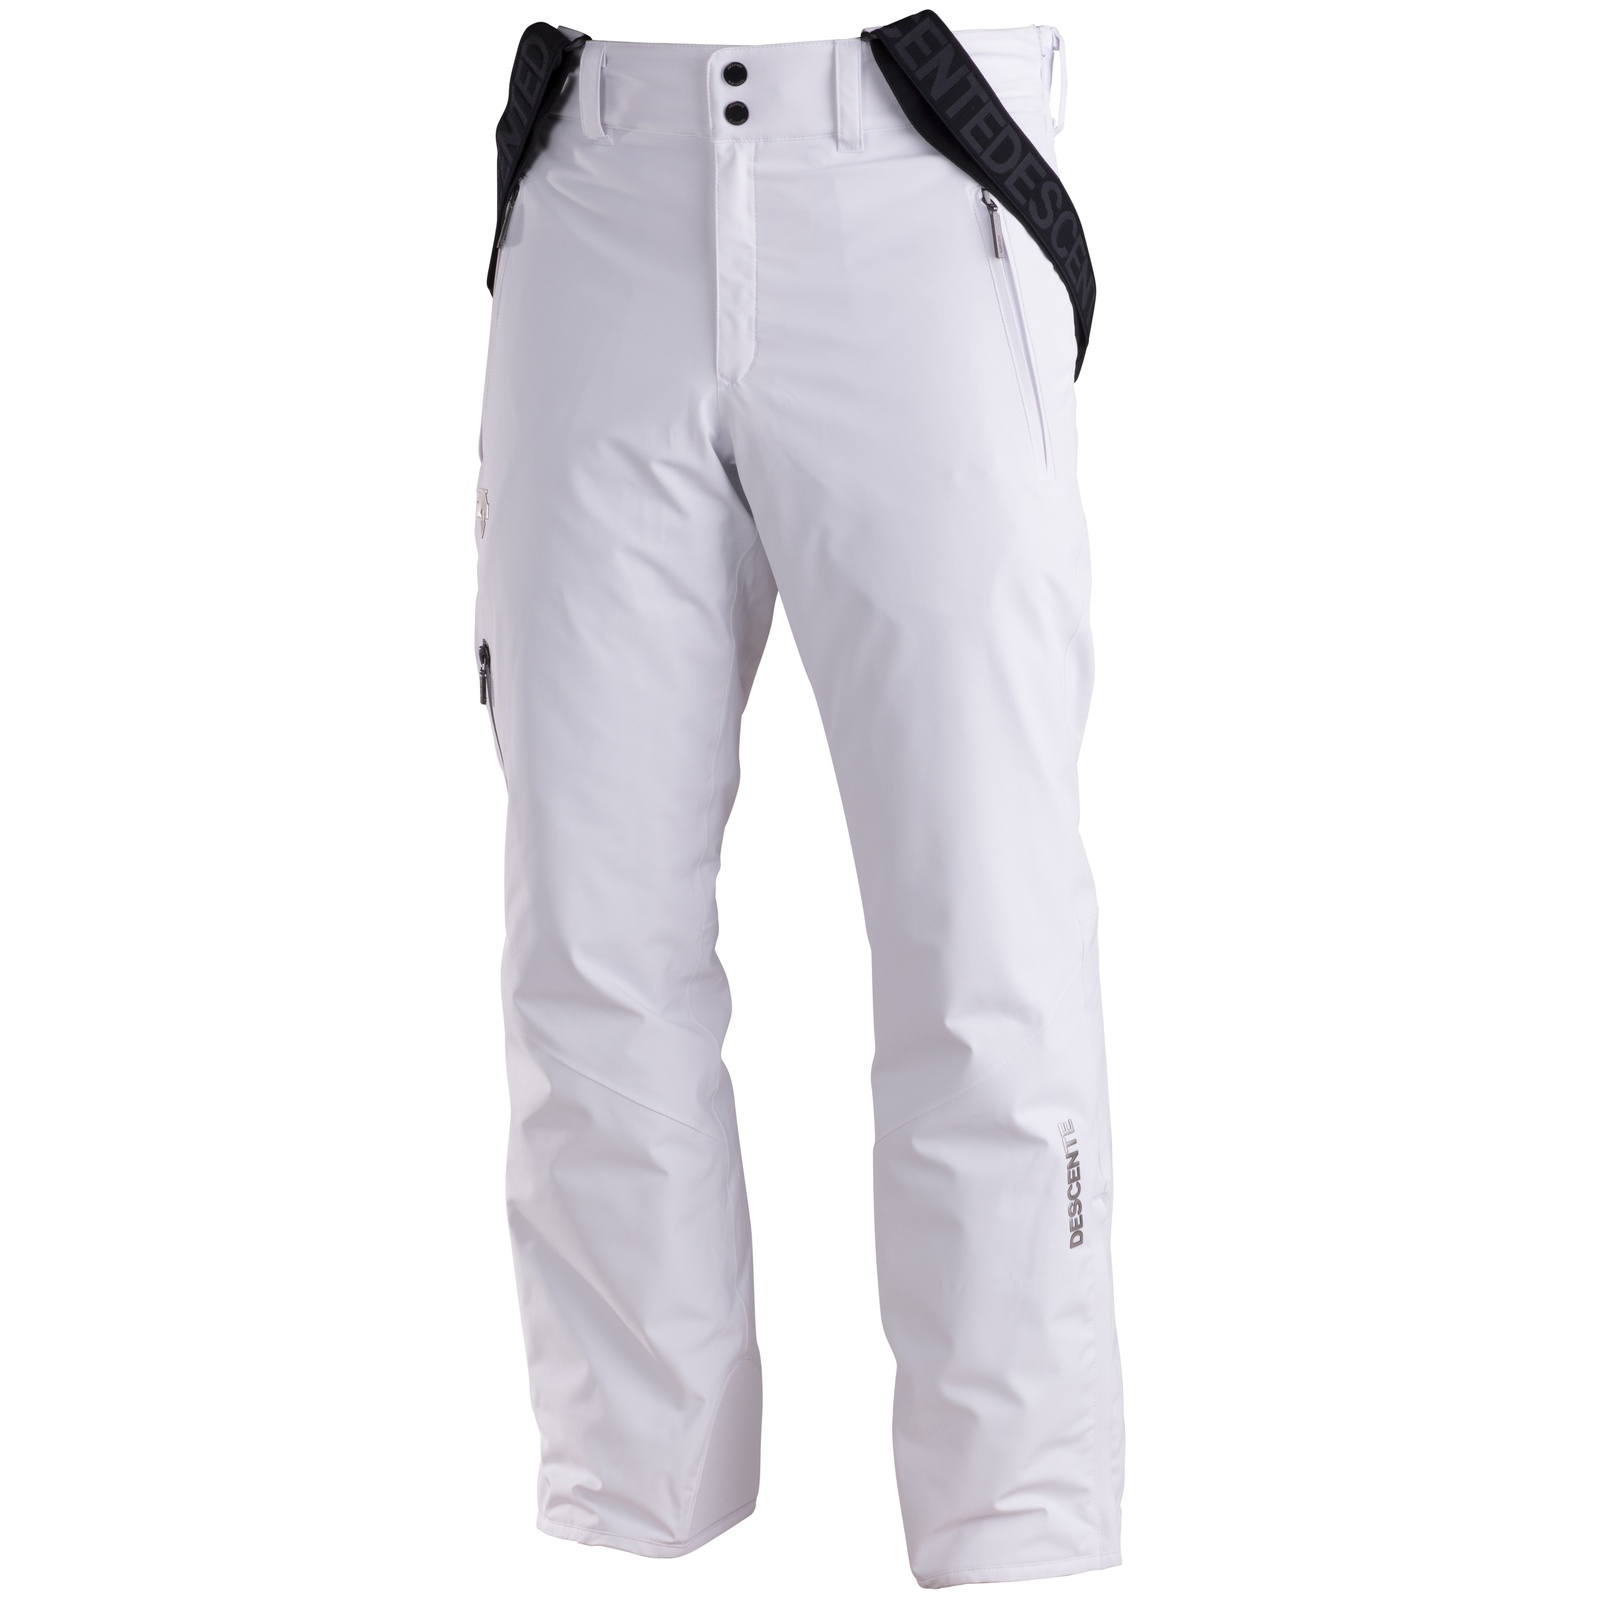 Descente Men's Swiss Ski Pants on Sale - Powder7.com